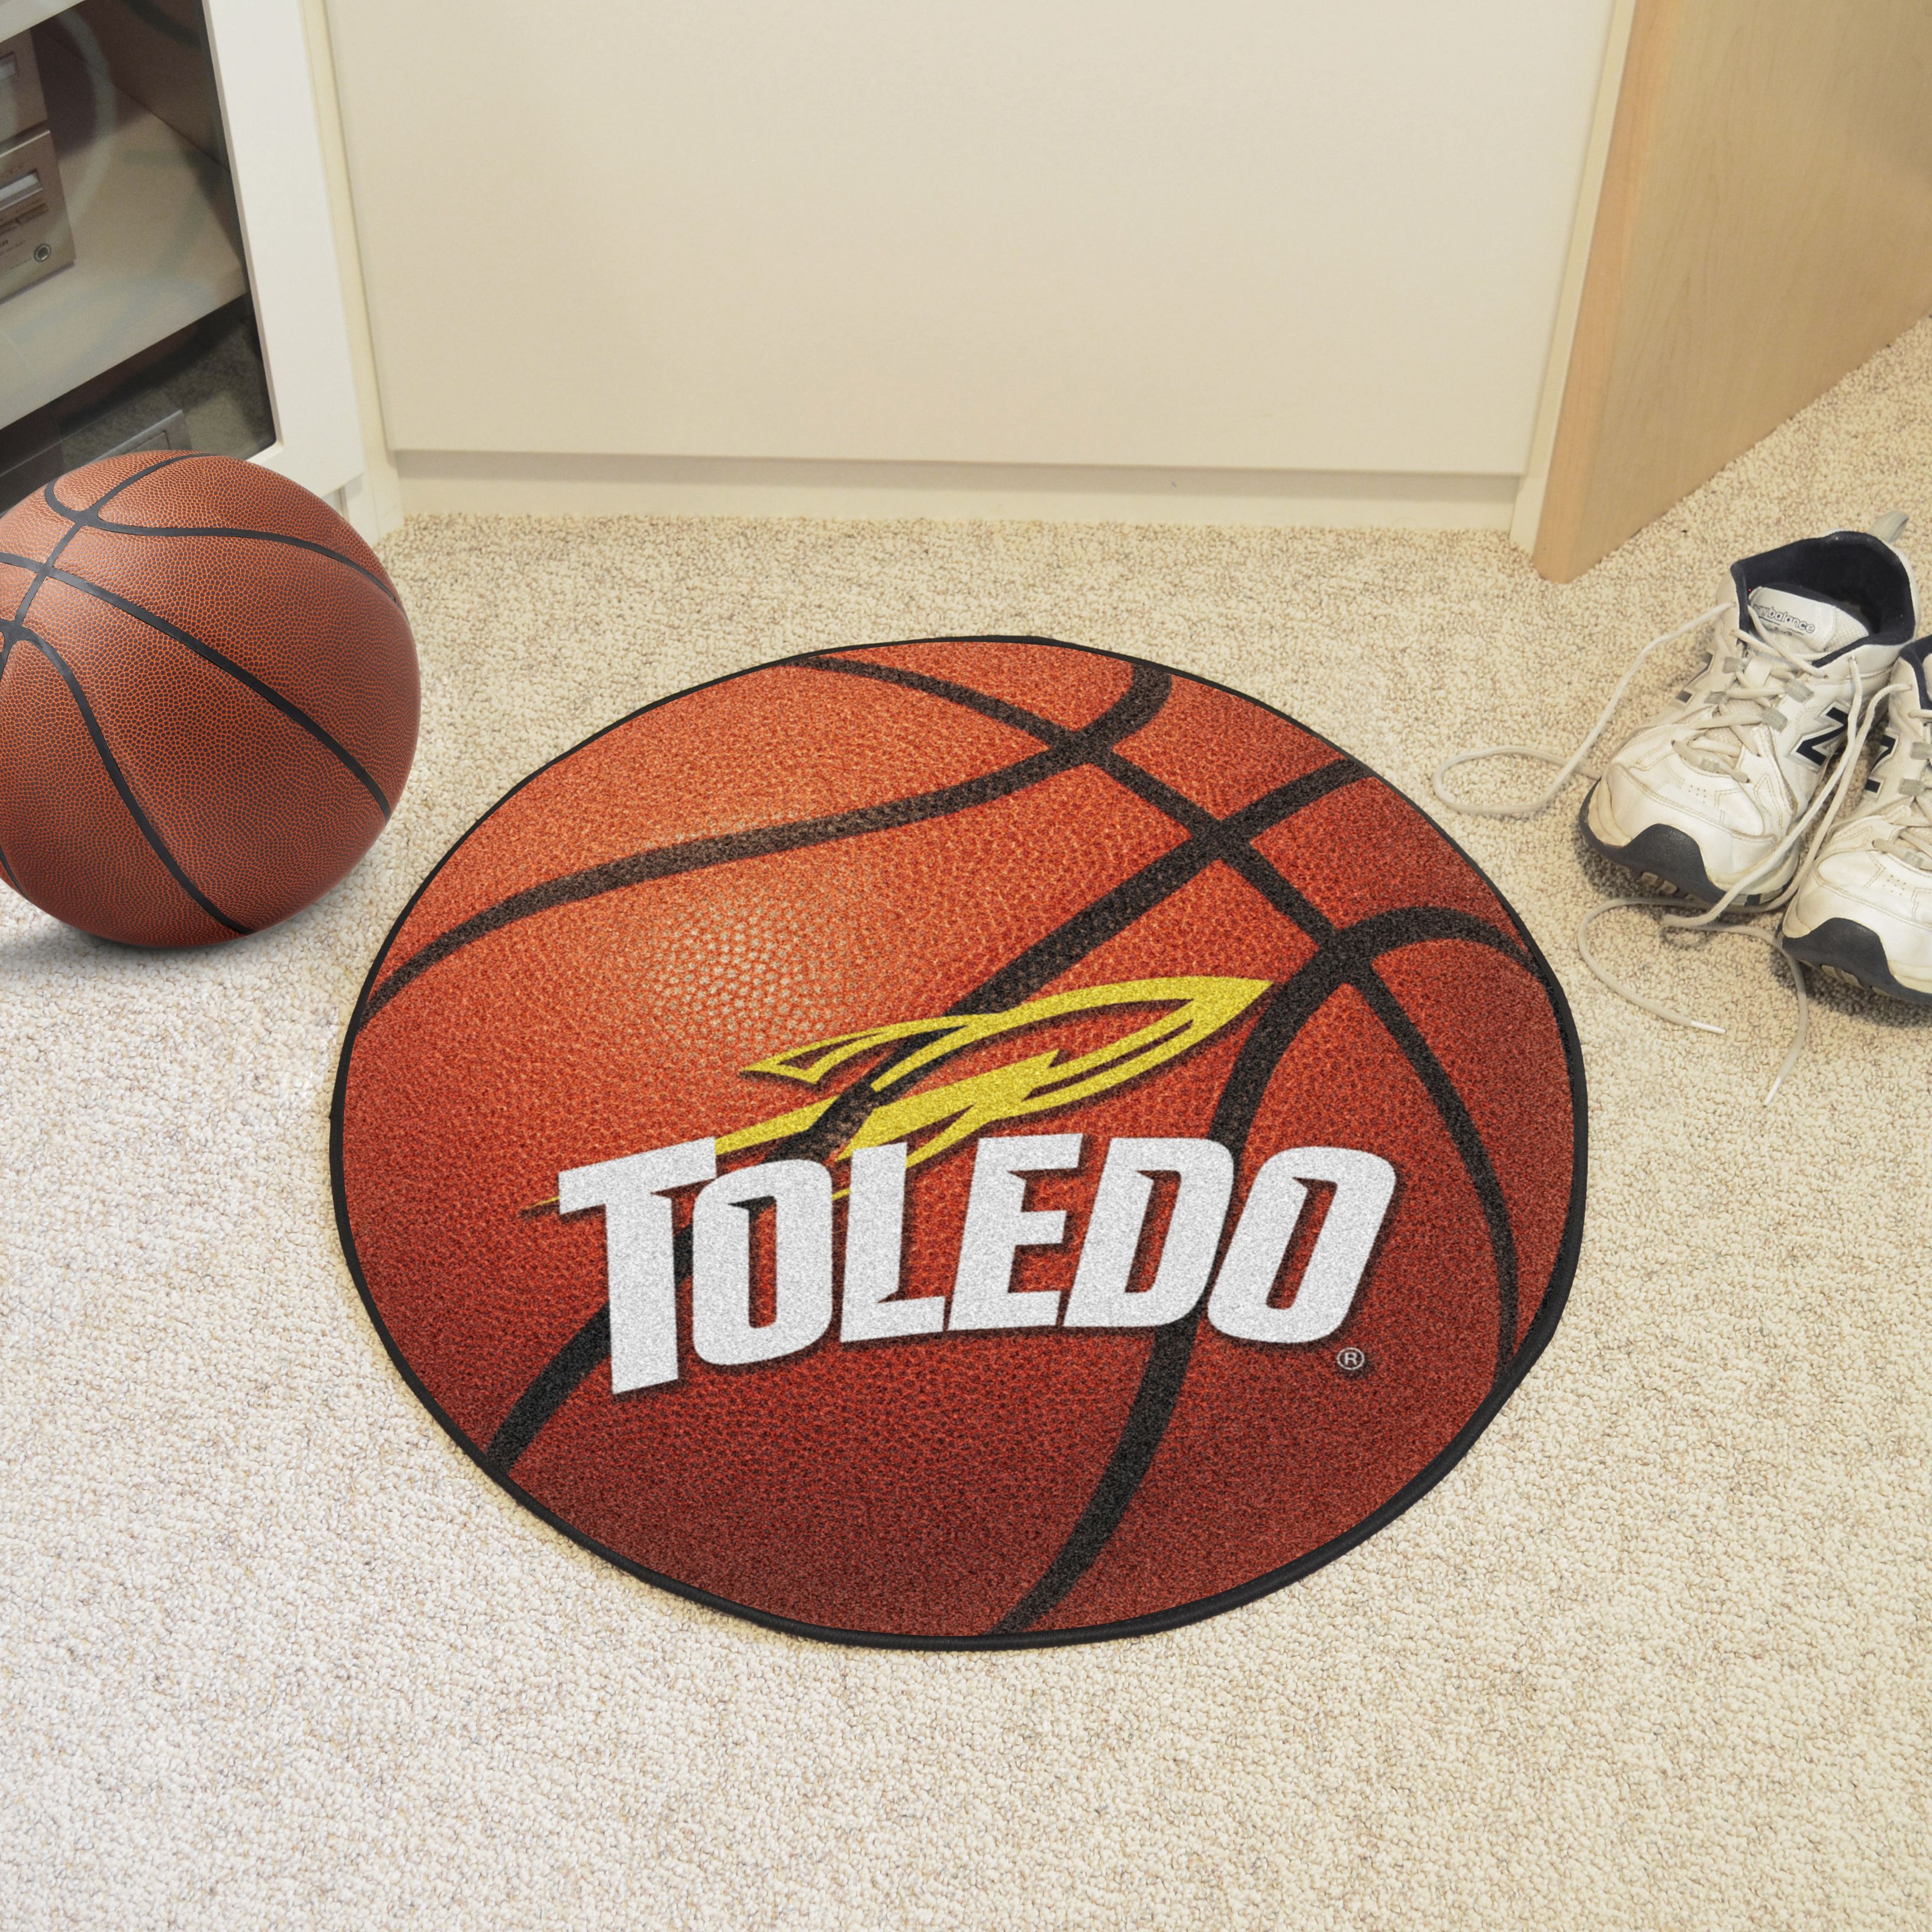 University of Toledo Ball Shaped Area Rugs (Ball Shaped Area Rugs: Basketball)